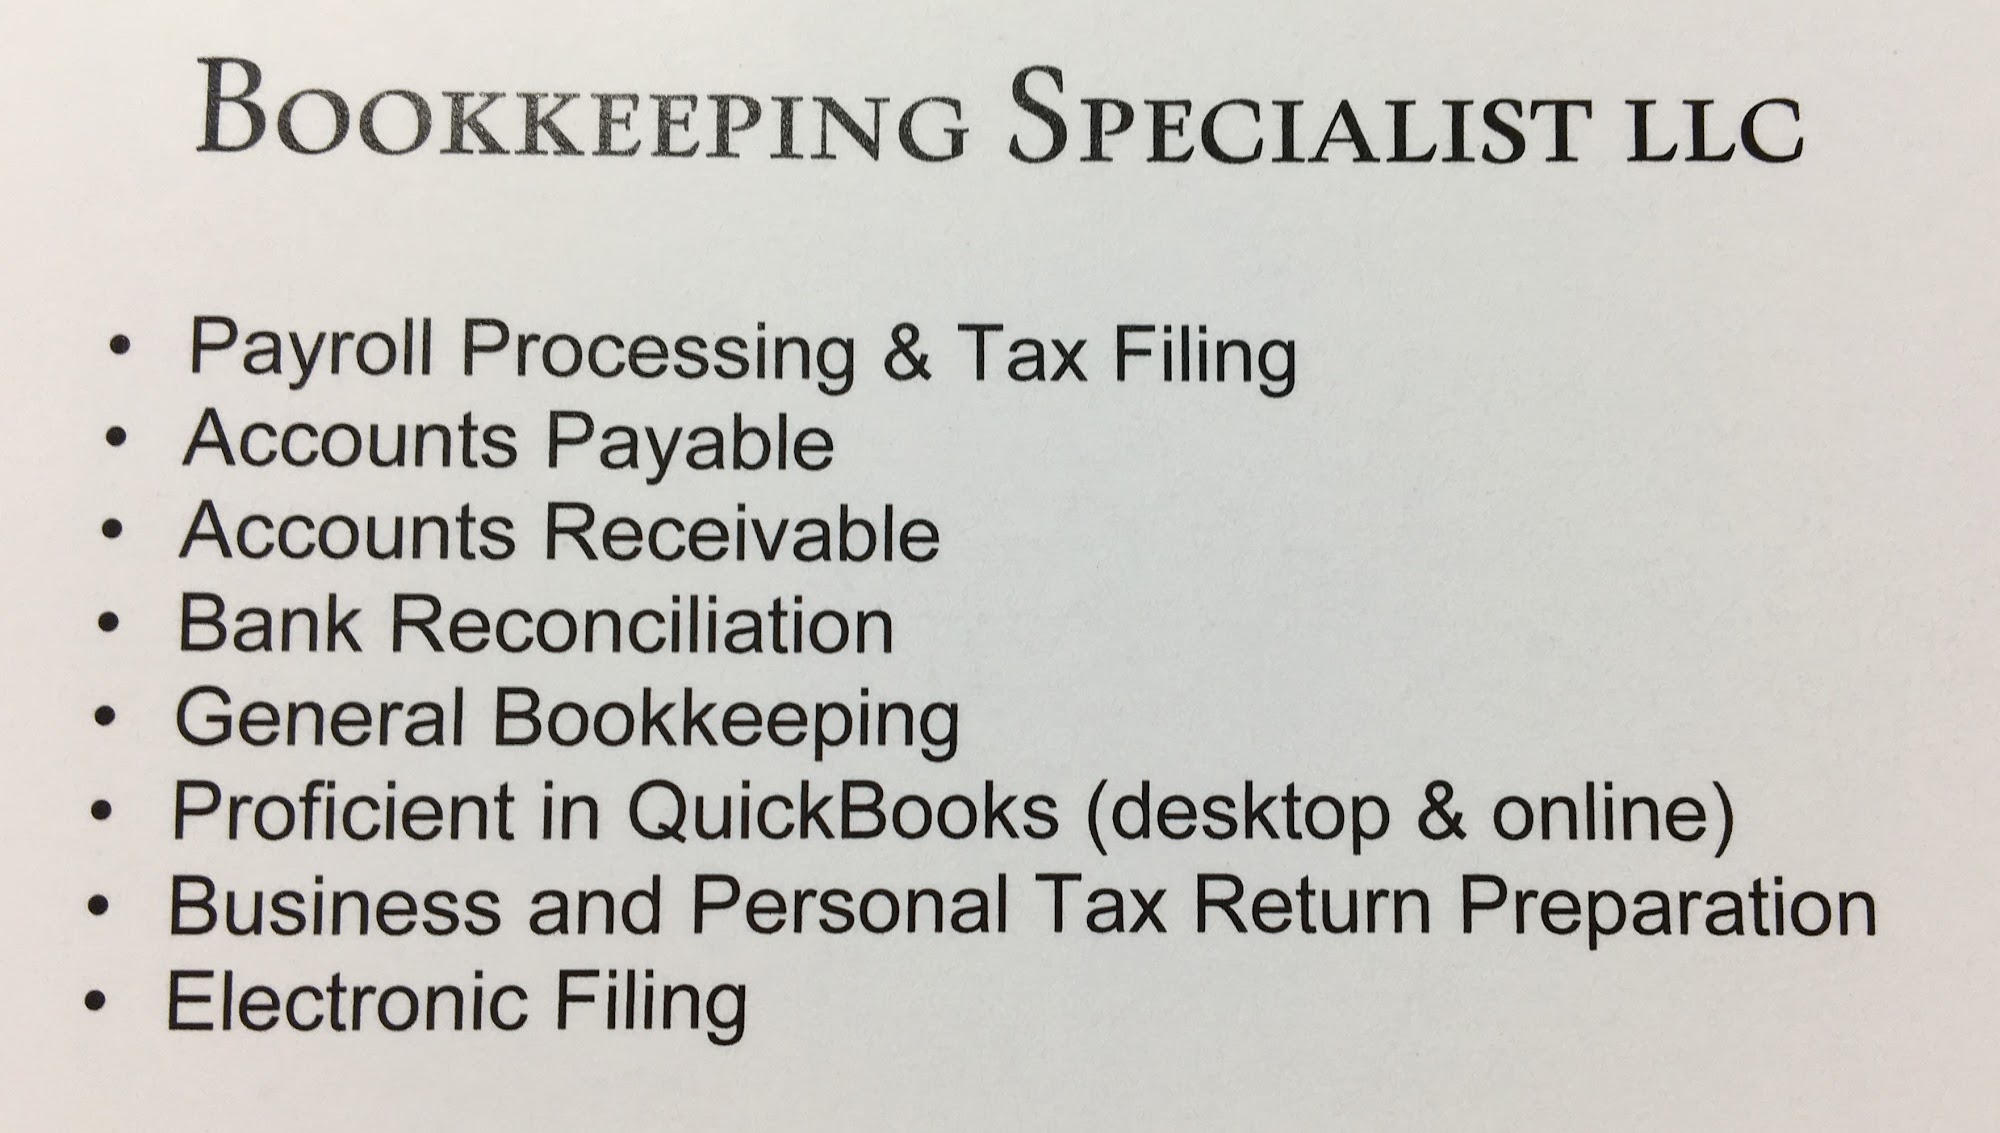 Bookkeeping Specialist LLC 59191 Annah Dr, New Hudson Michigan 48165